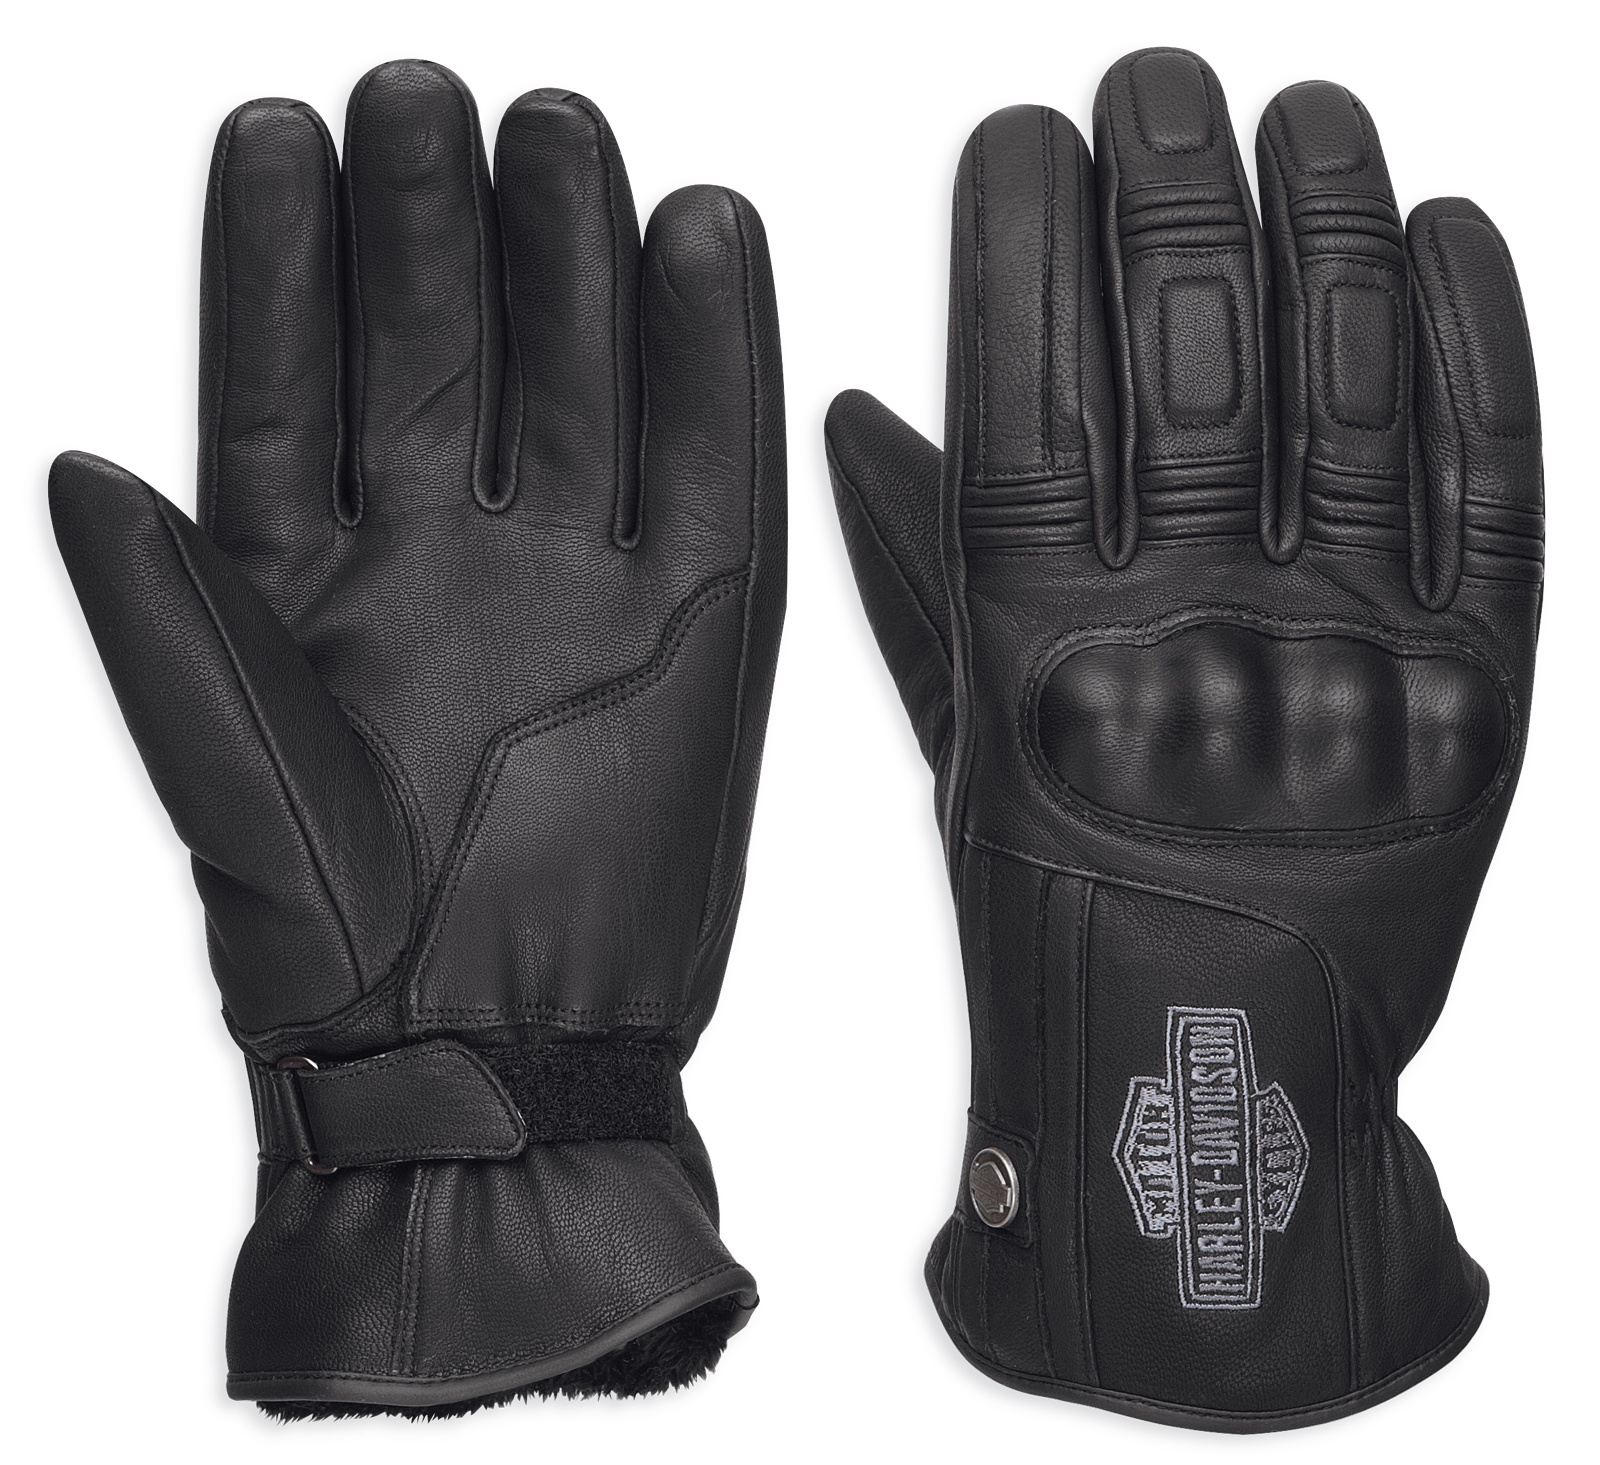 Harley Davidson Leather Gloves Promotions